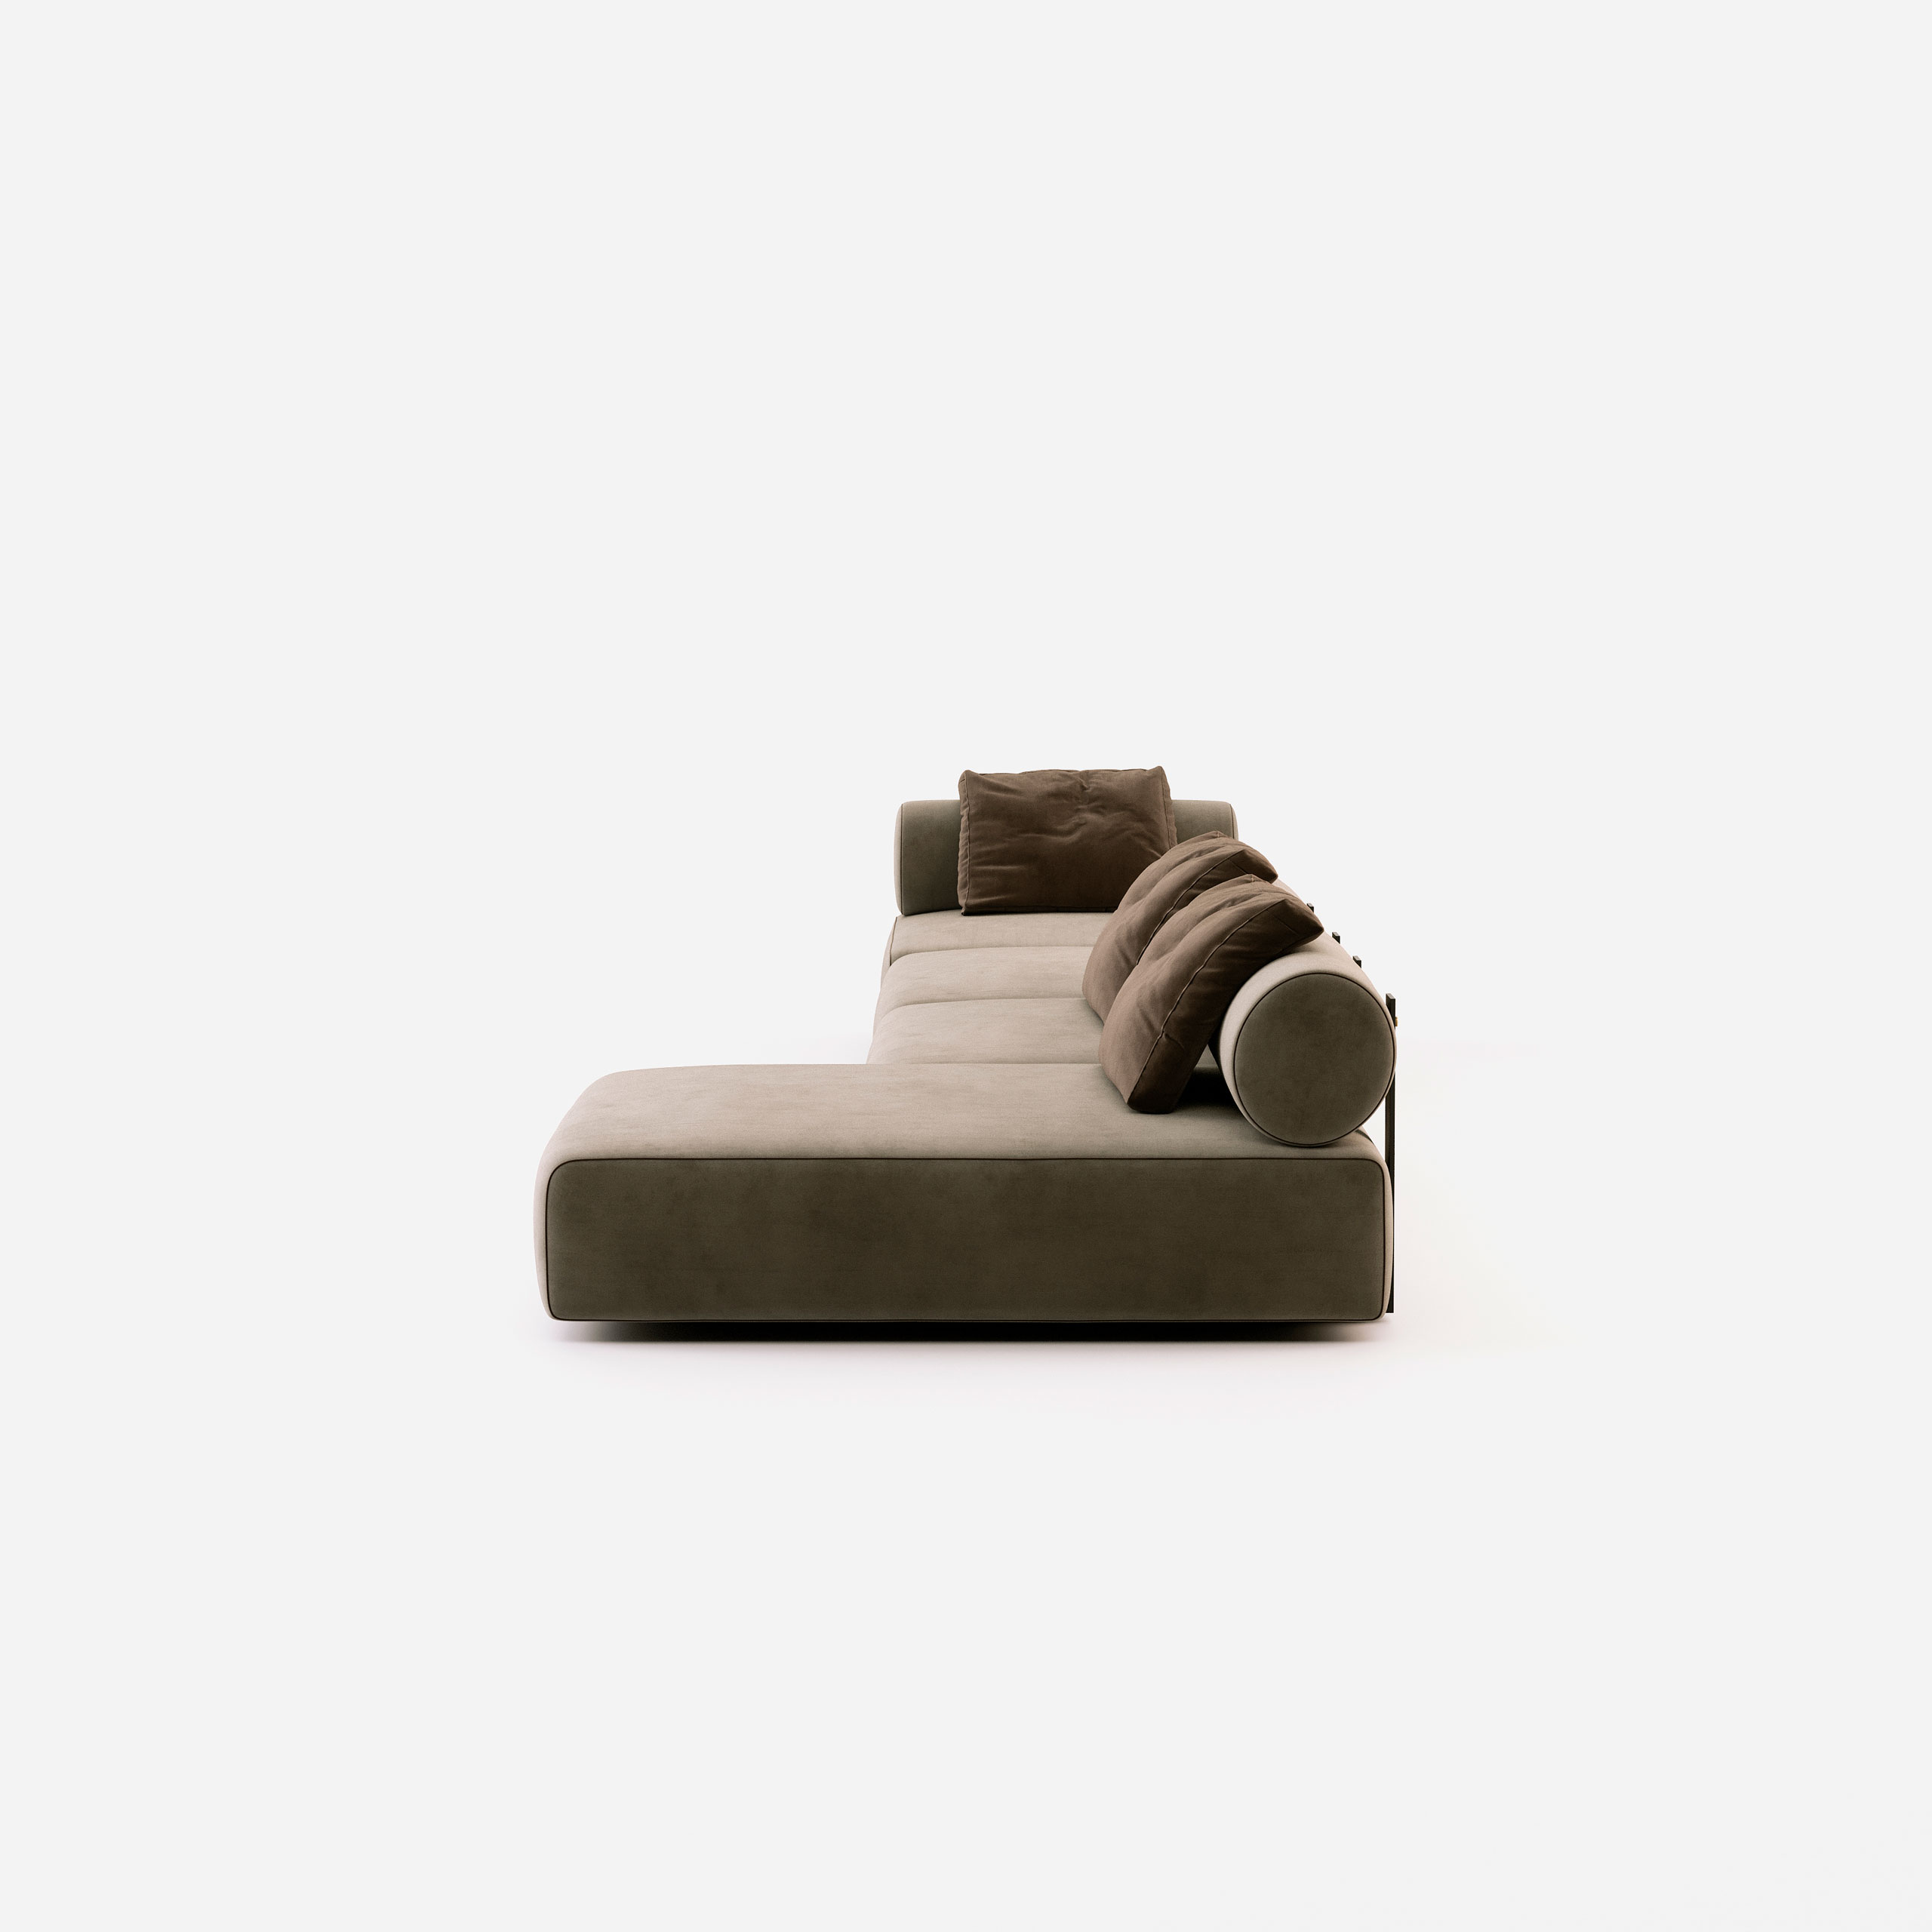 shinto-sofa-domkapa-new-collection-2021-living-room-decor